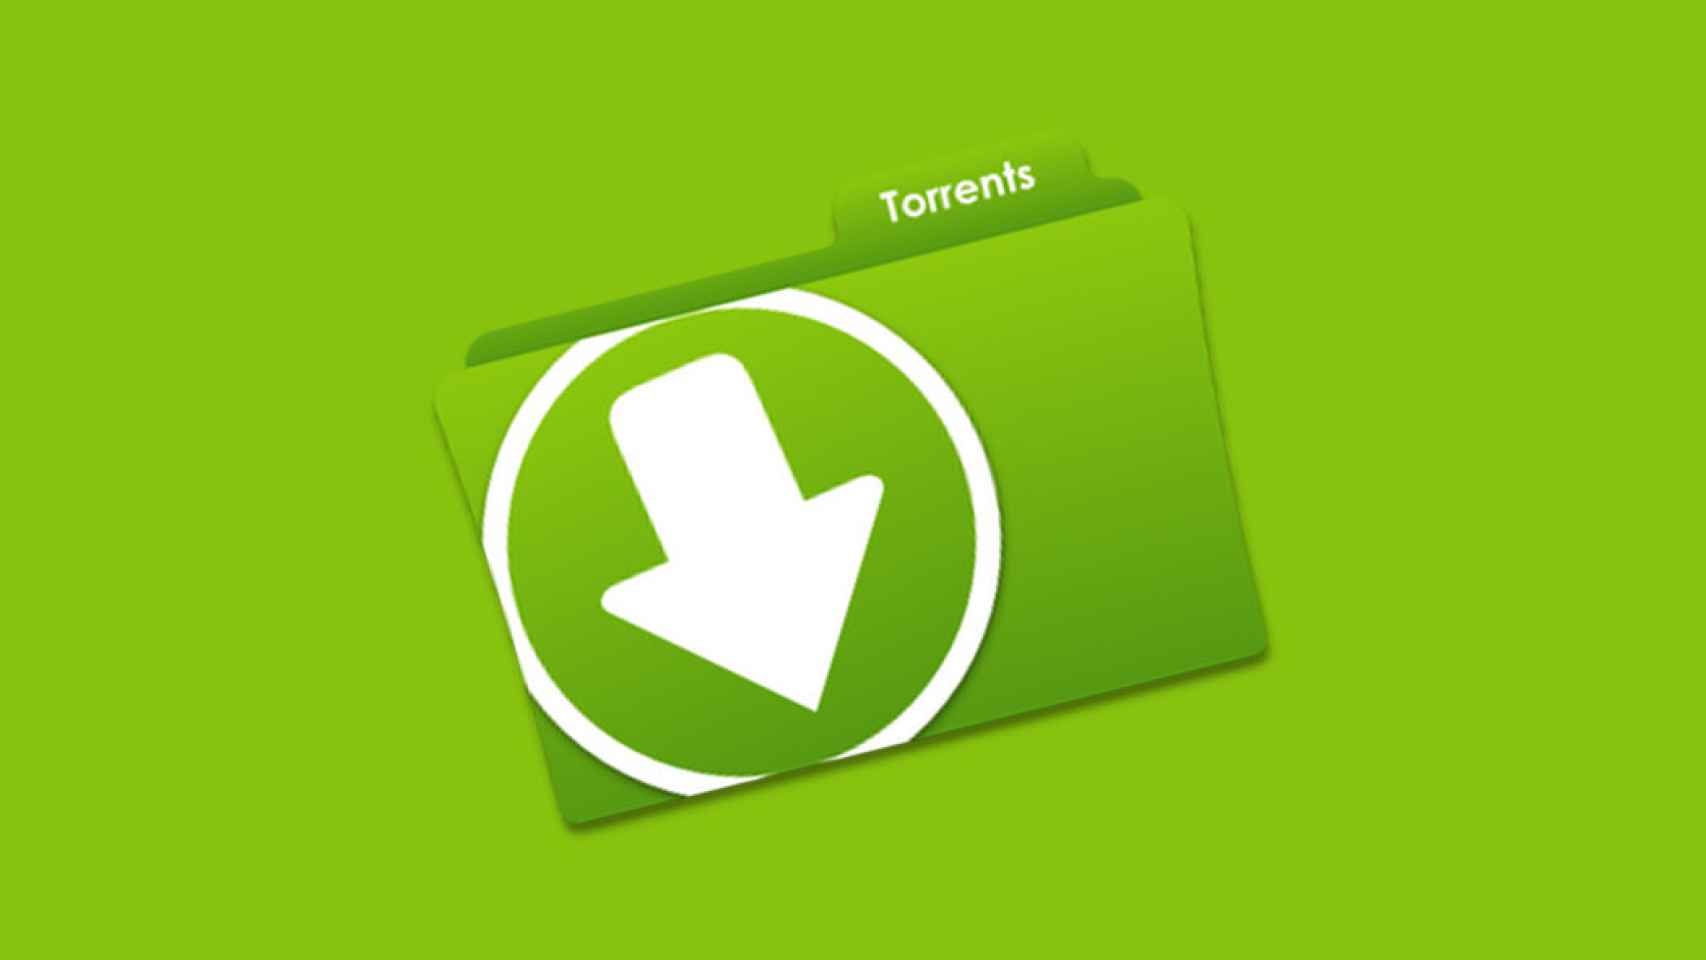 torrents